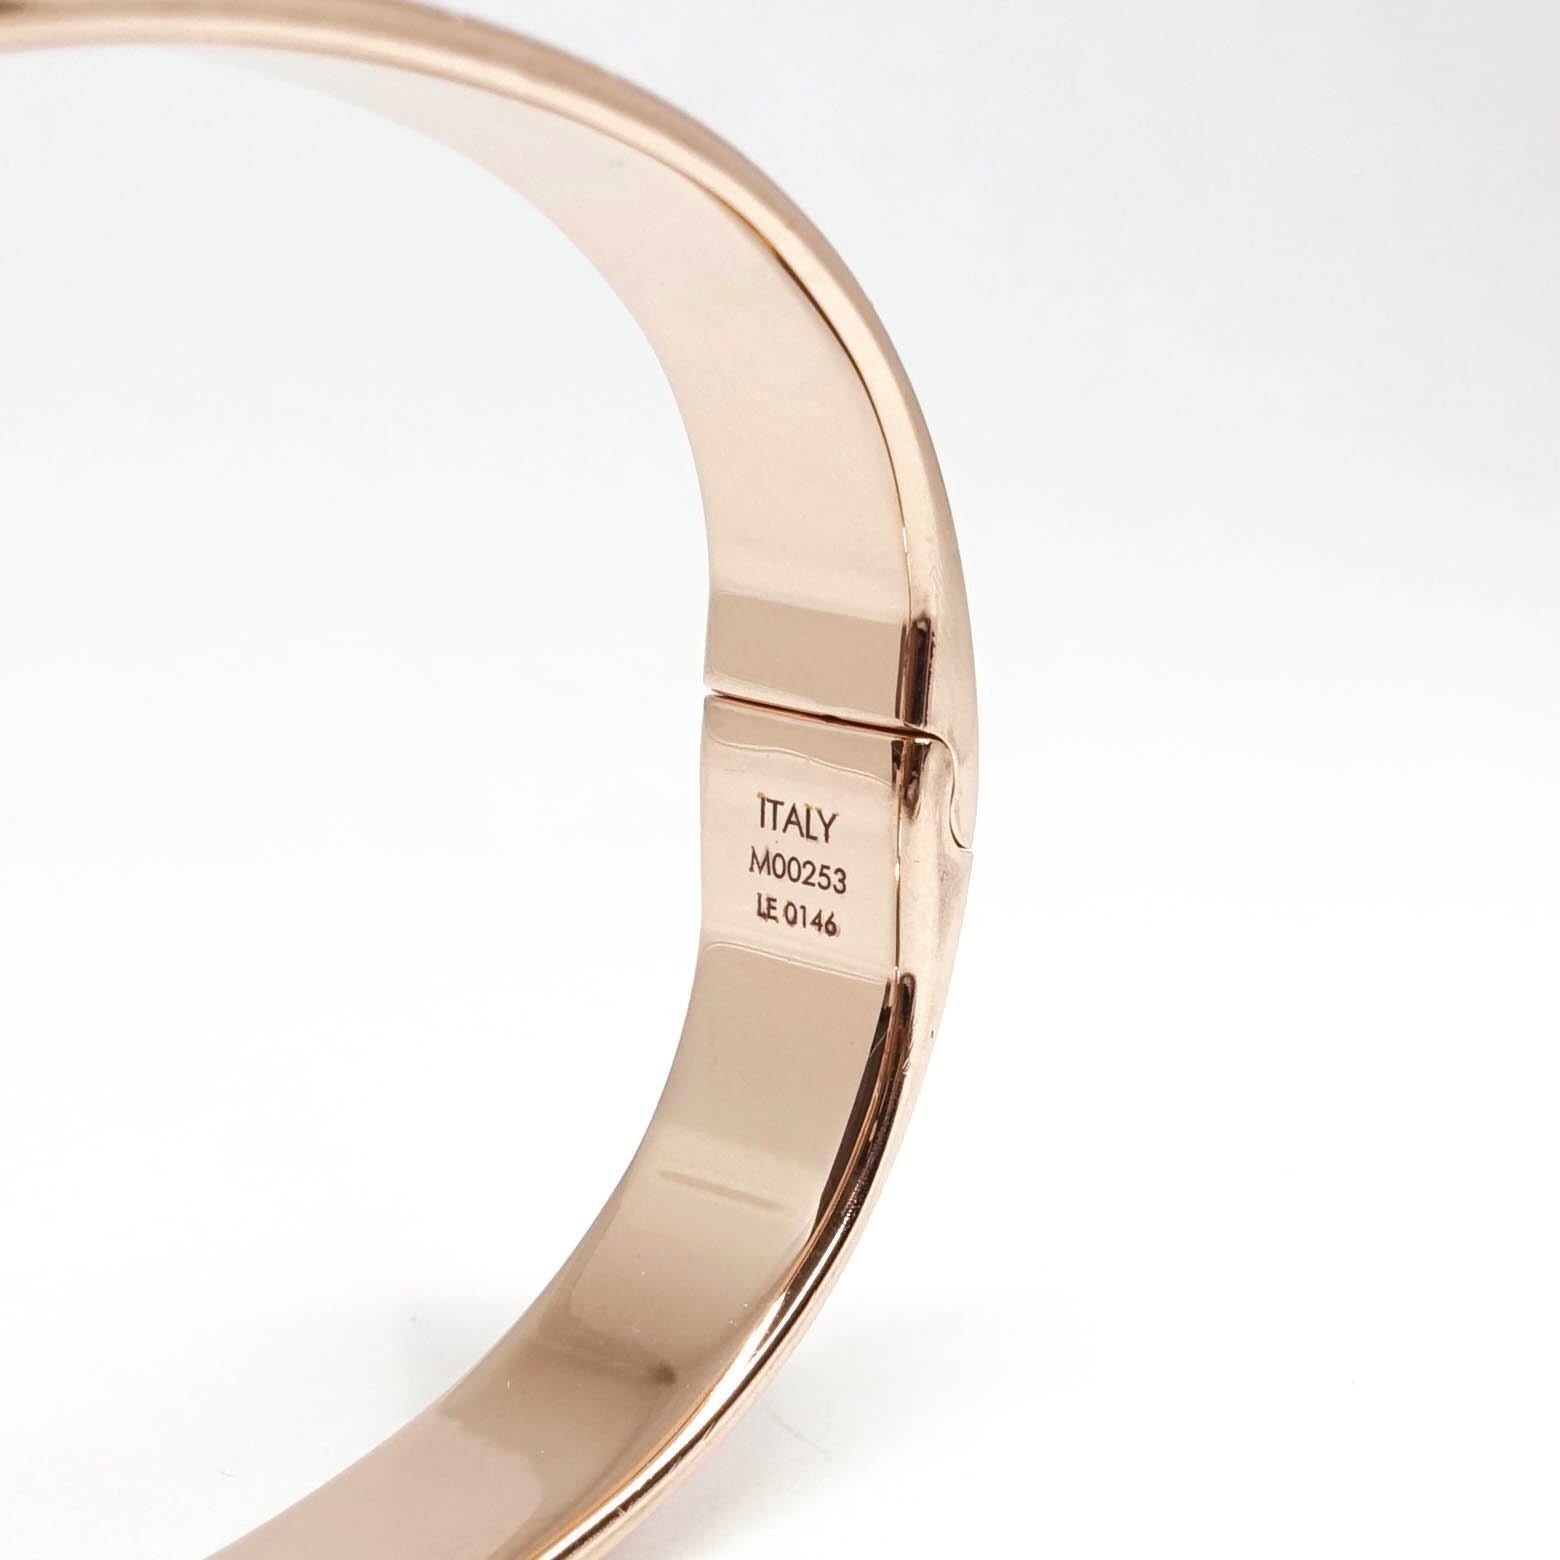 Louis Vuitton Nanogram Cuff Bangle Size S Pink Gold Metal M00253 with Box